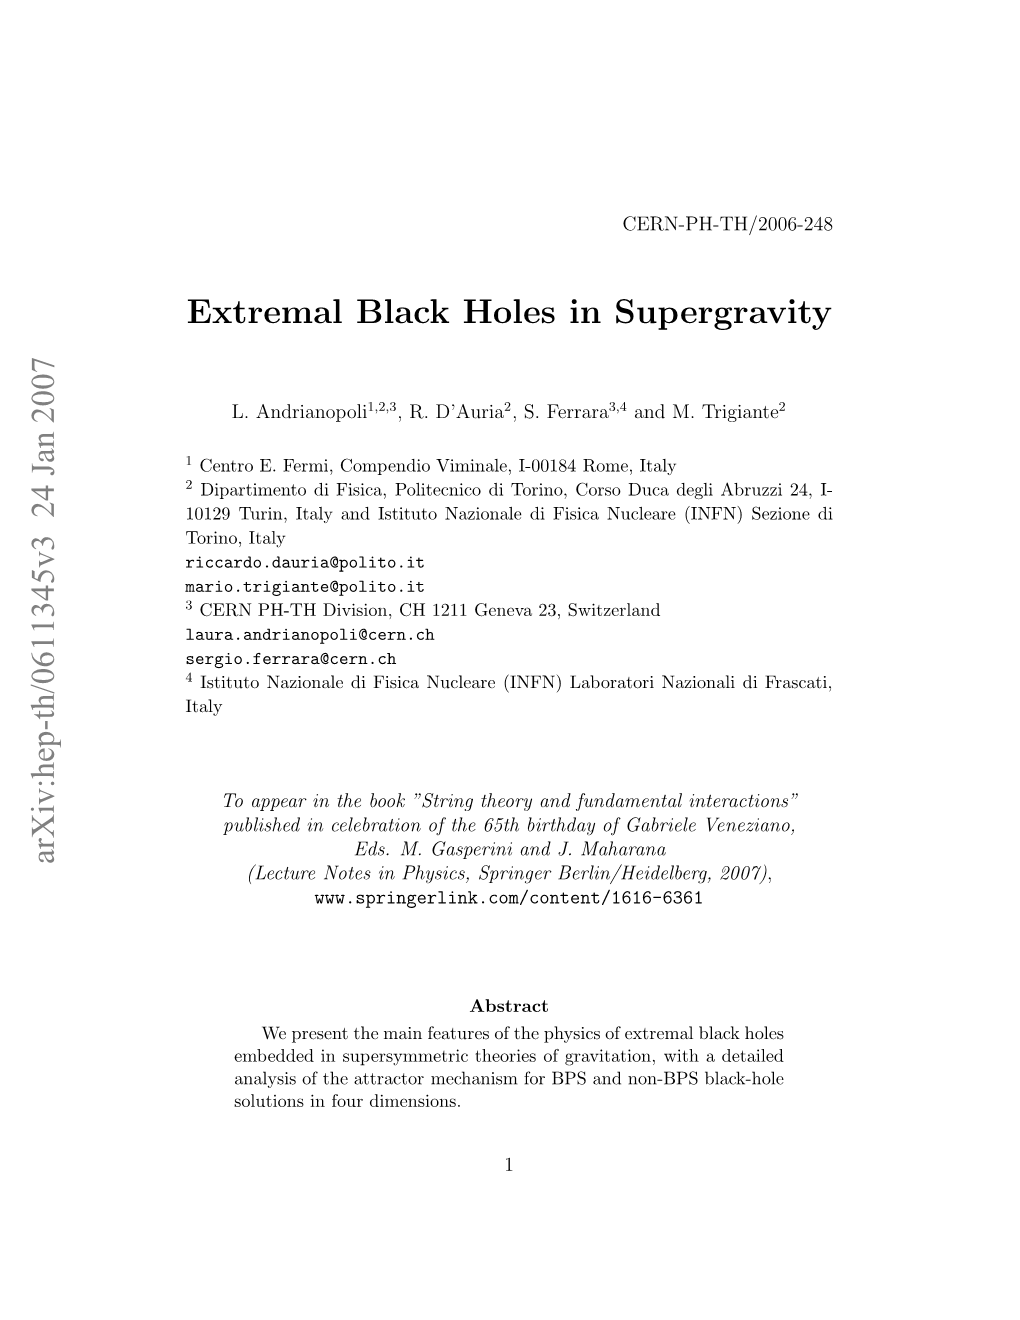 Extremal Black Holes in Supergravity